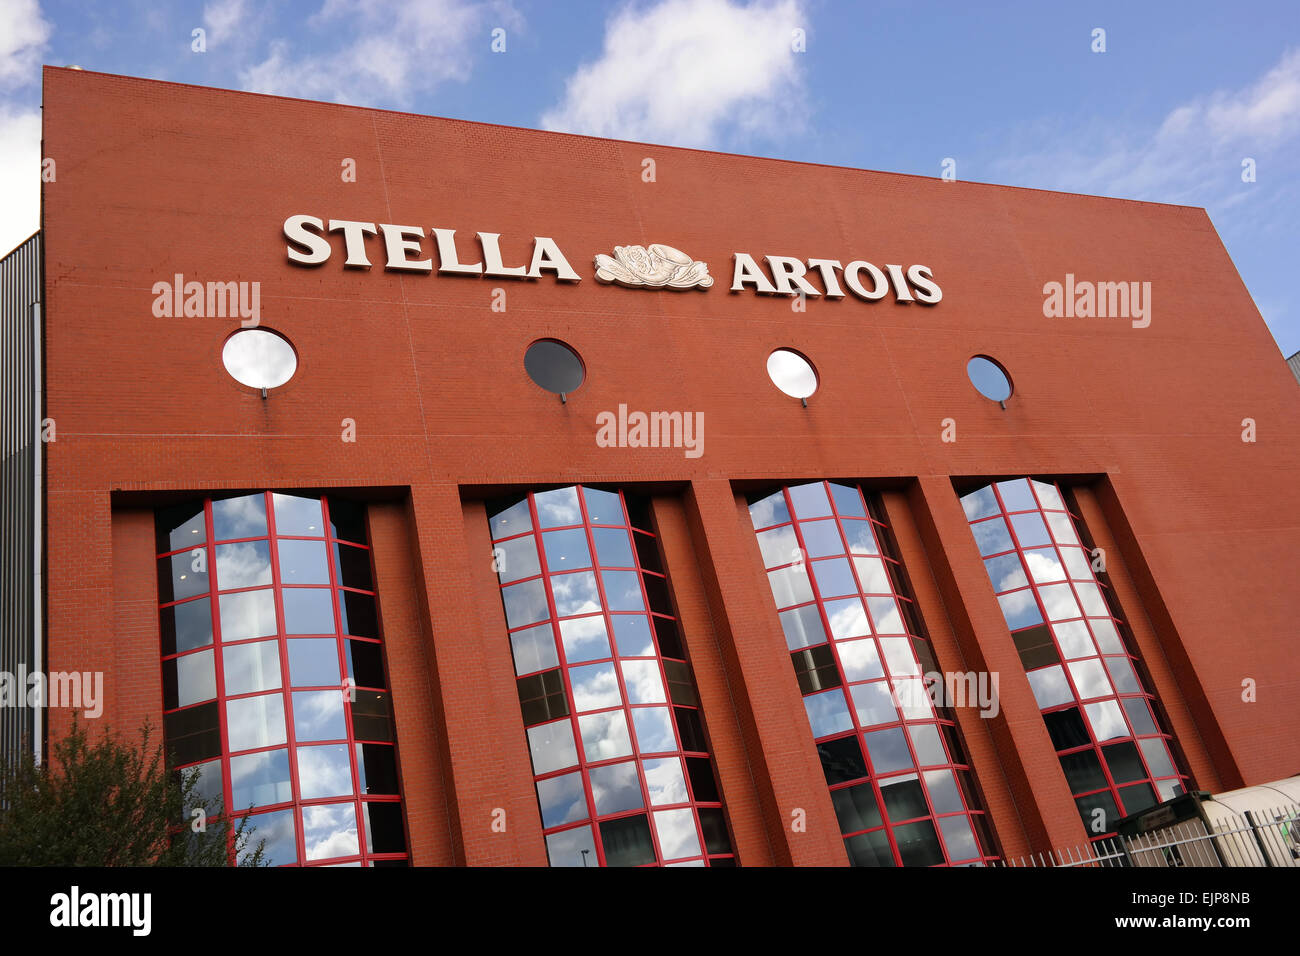 LEUVEN, BELGIQUE - OCTOBRE 2014 brasserie Stella Artois Leuven dans le cadre d'Anheuser-Busch InBev. Banque D'Images